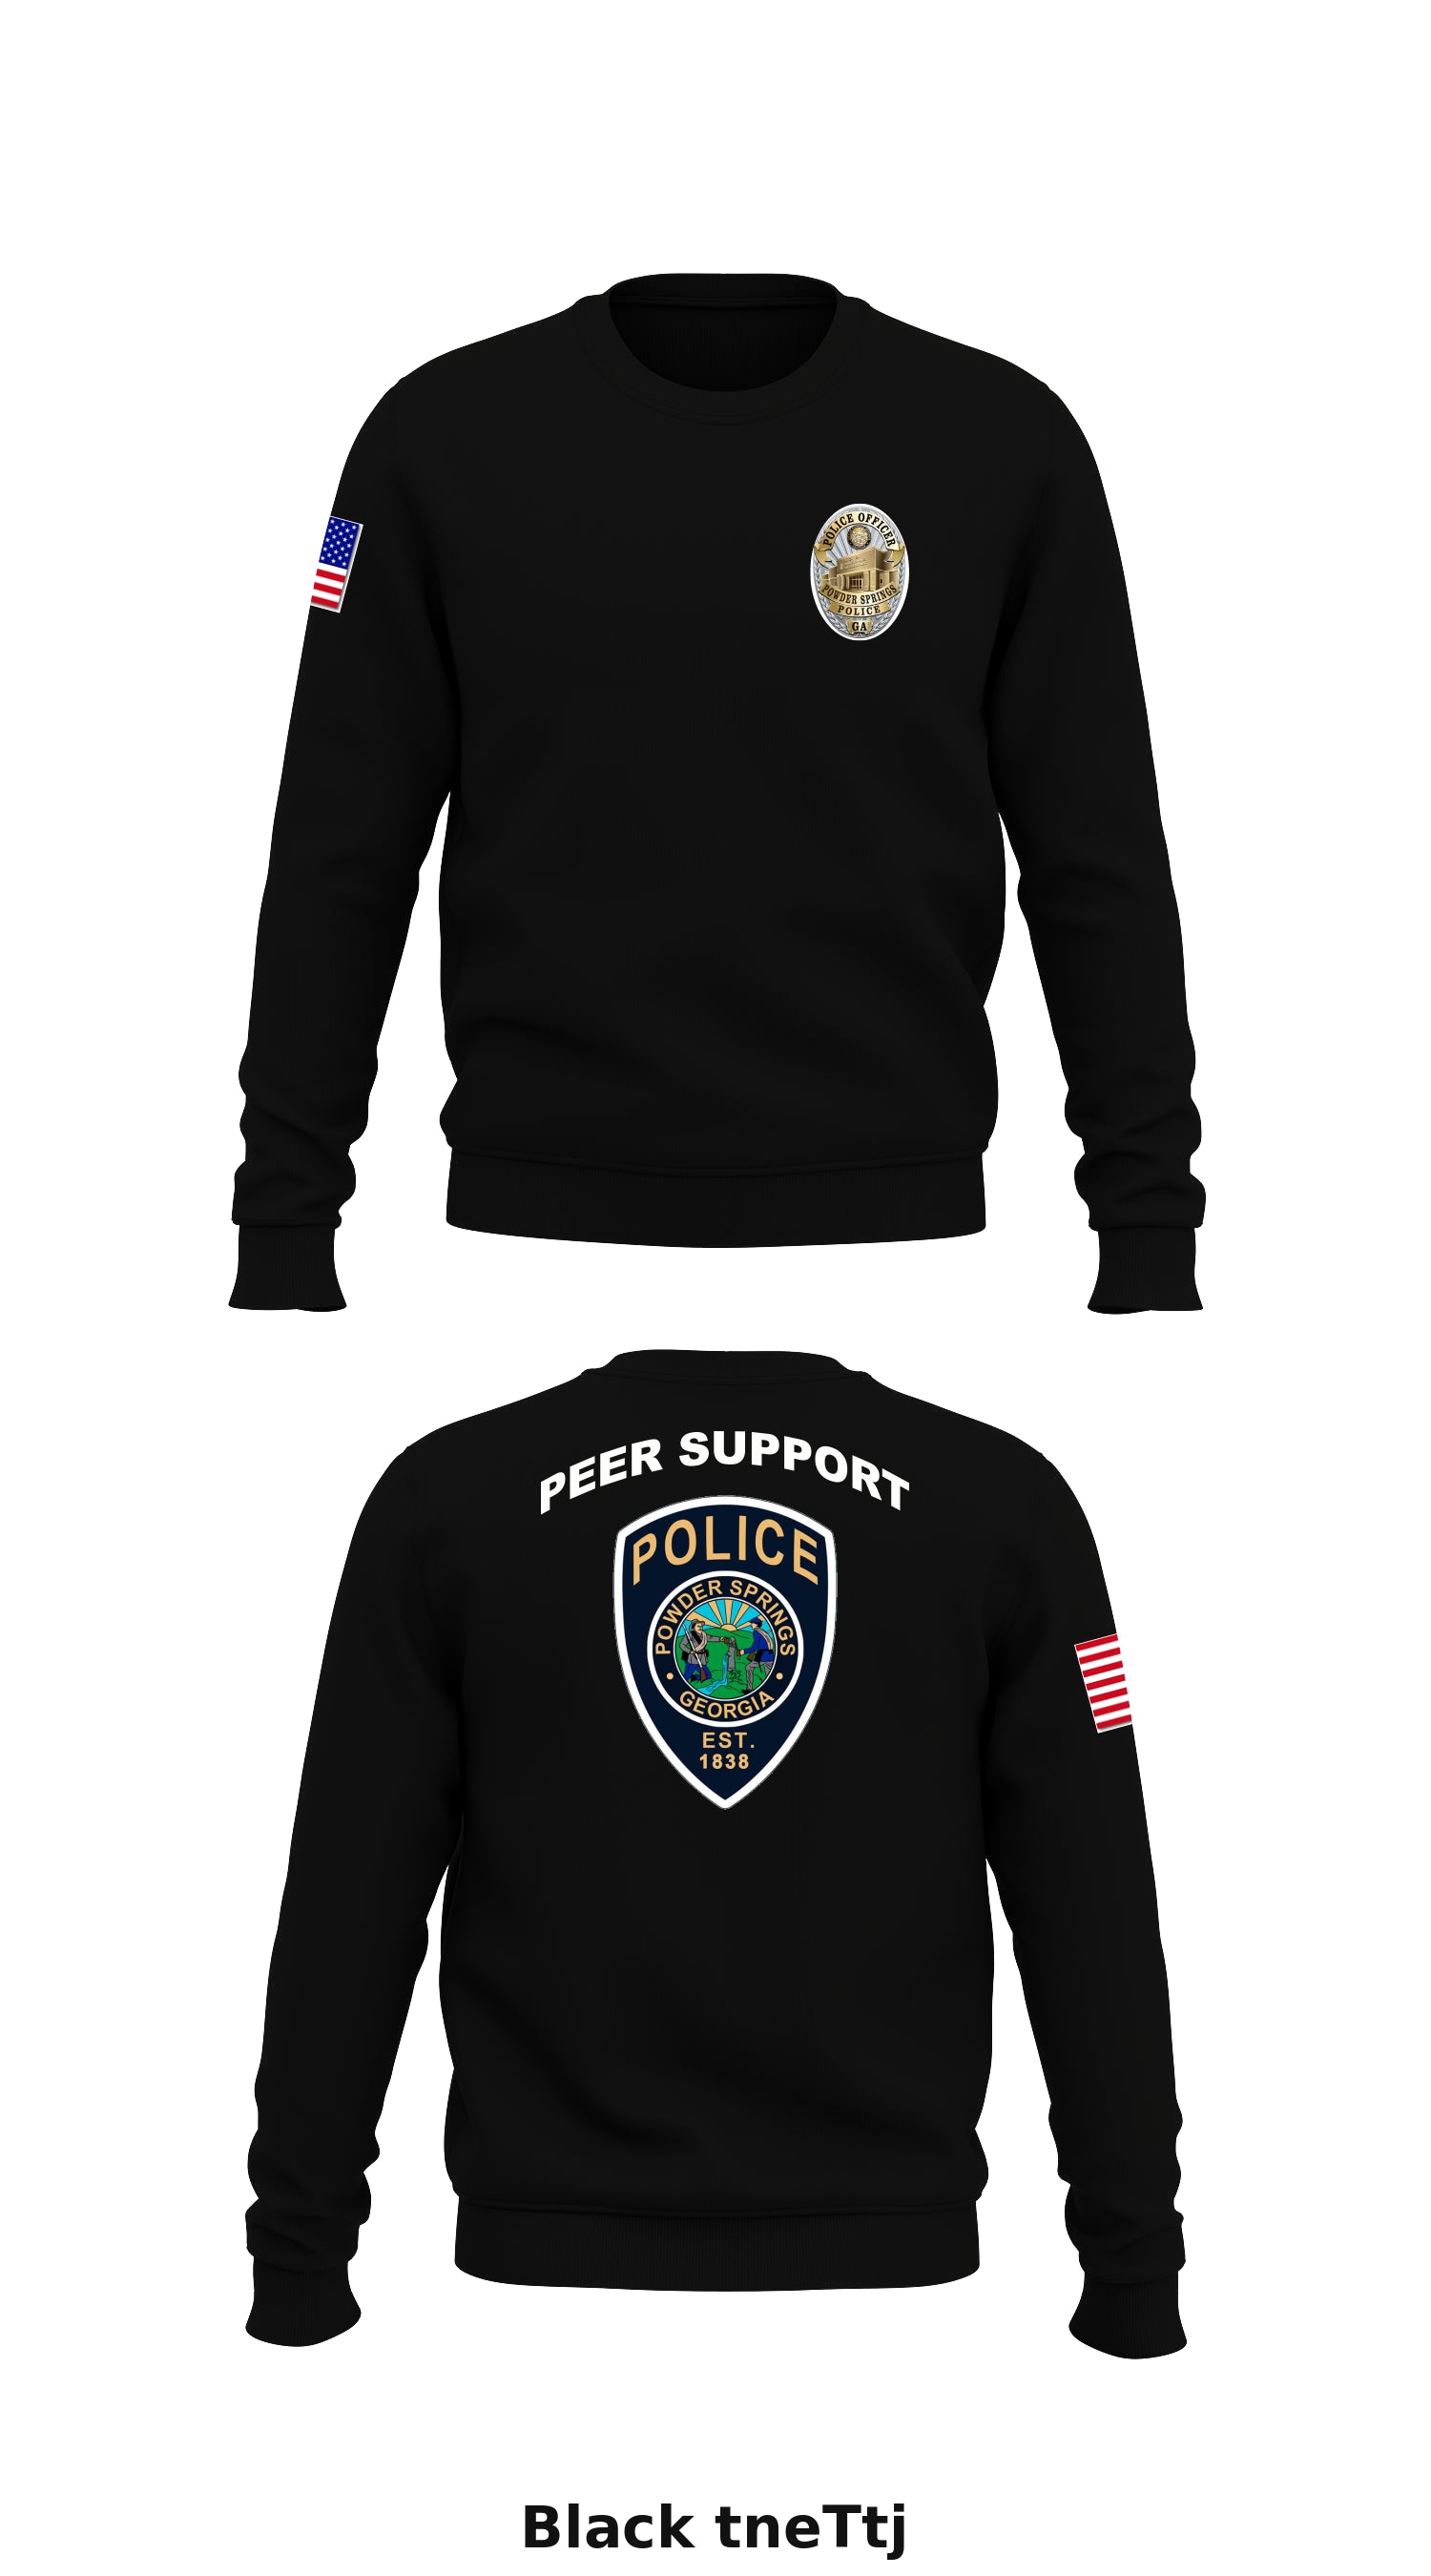 Powder Springs Police Department Peer Support Store 1 Core Men's Crewneck  Performance Sweatshirt - tneTtj